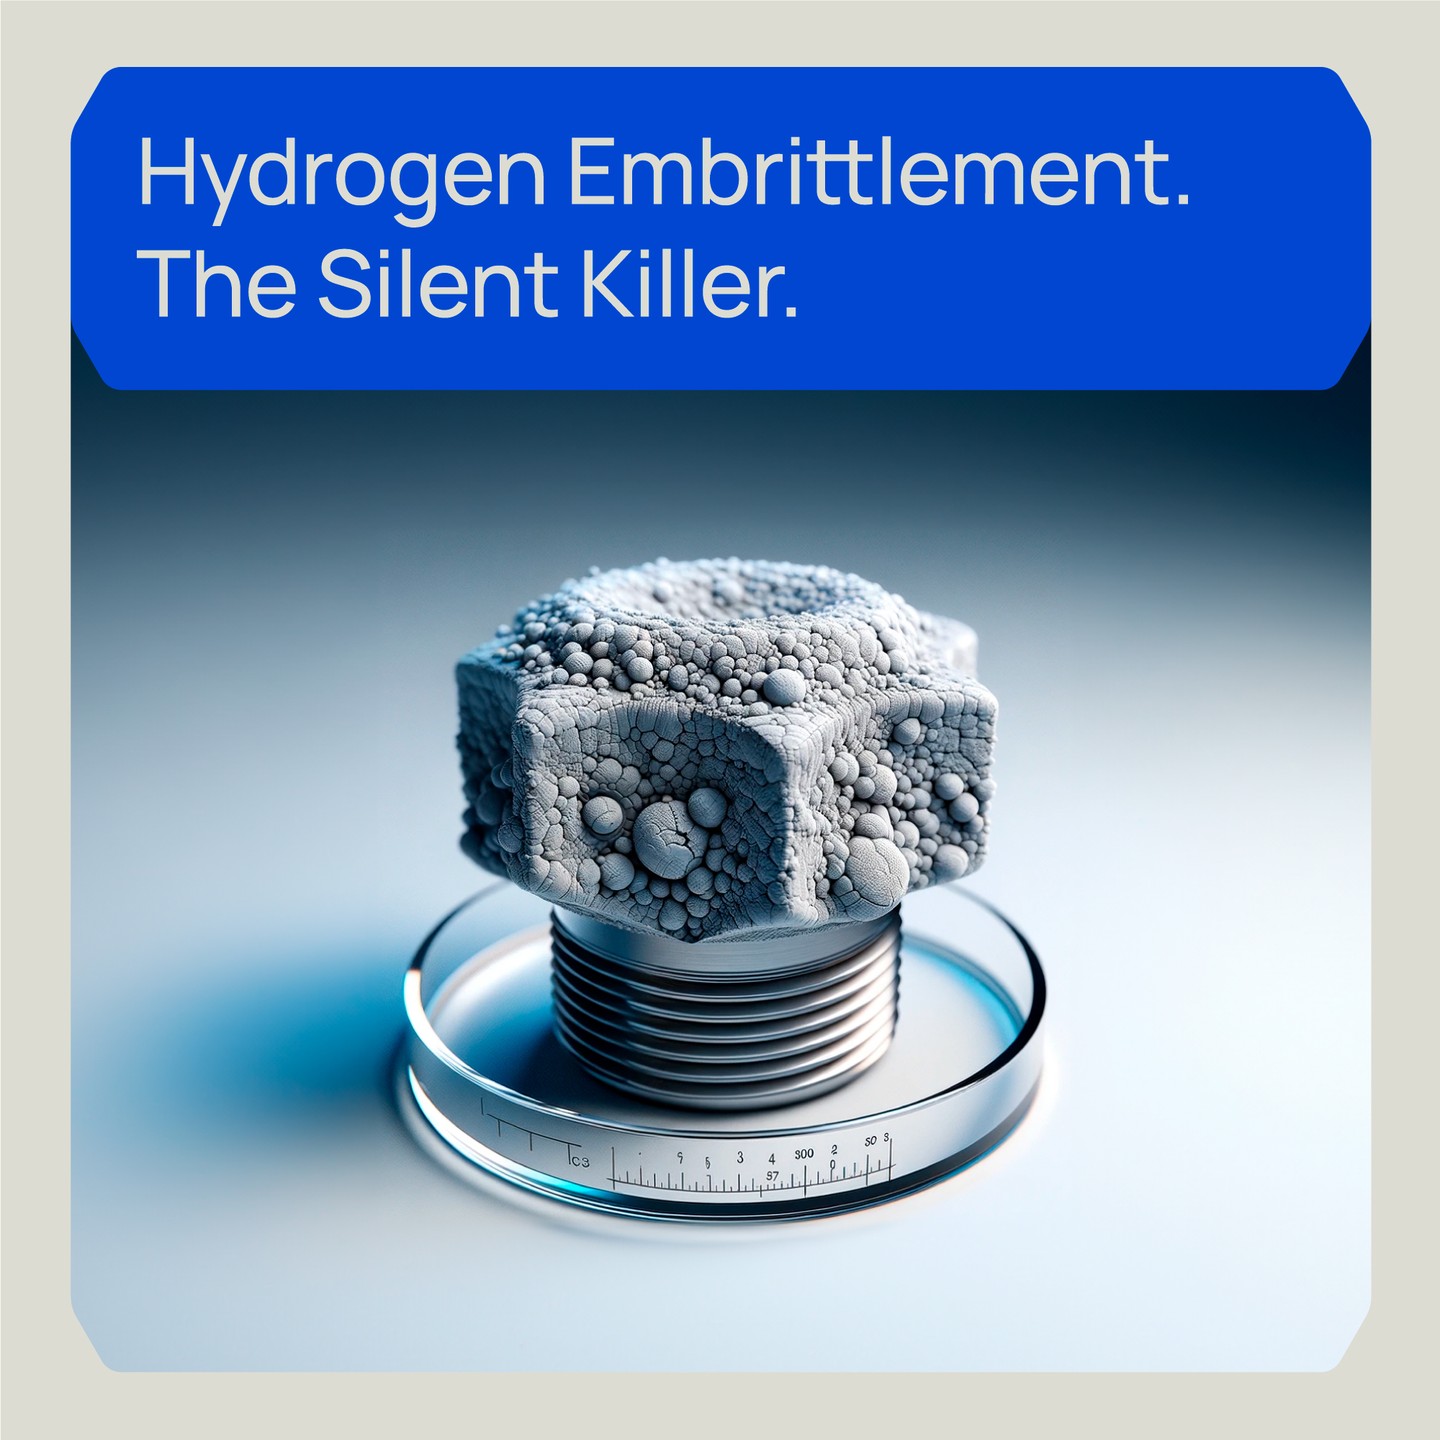 Hydrogen Embrittlement. The Silent Killer.